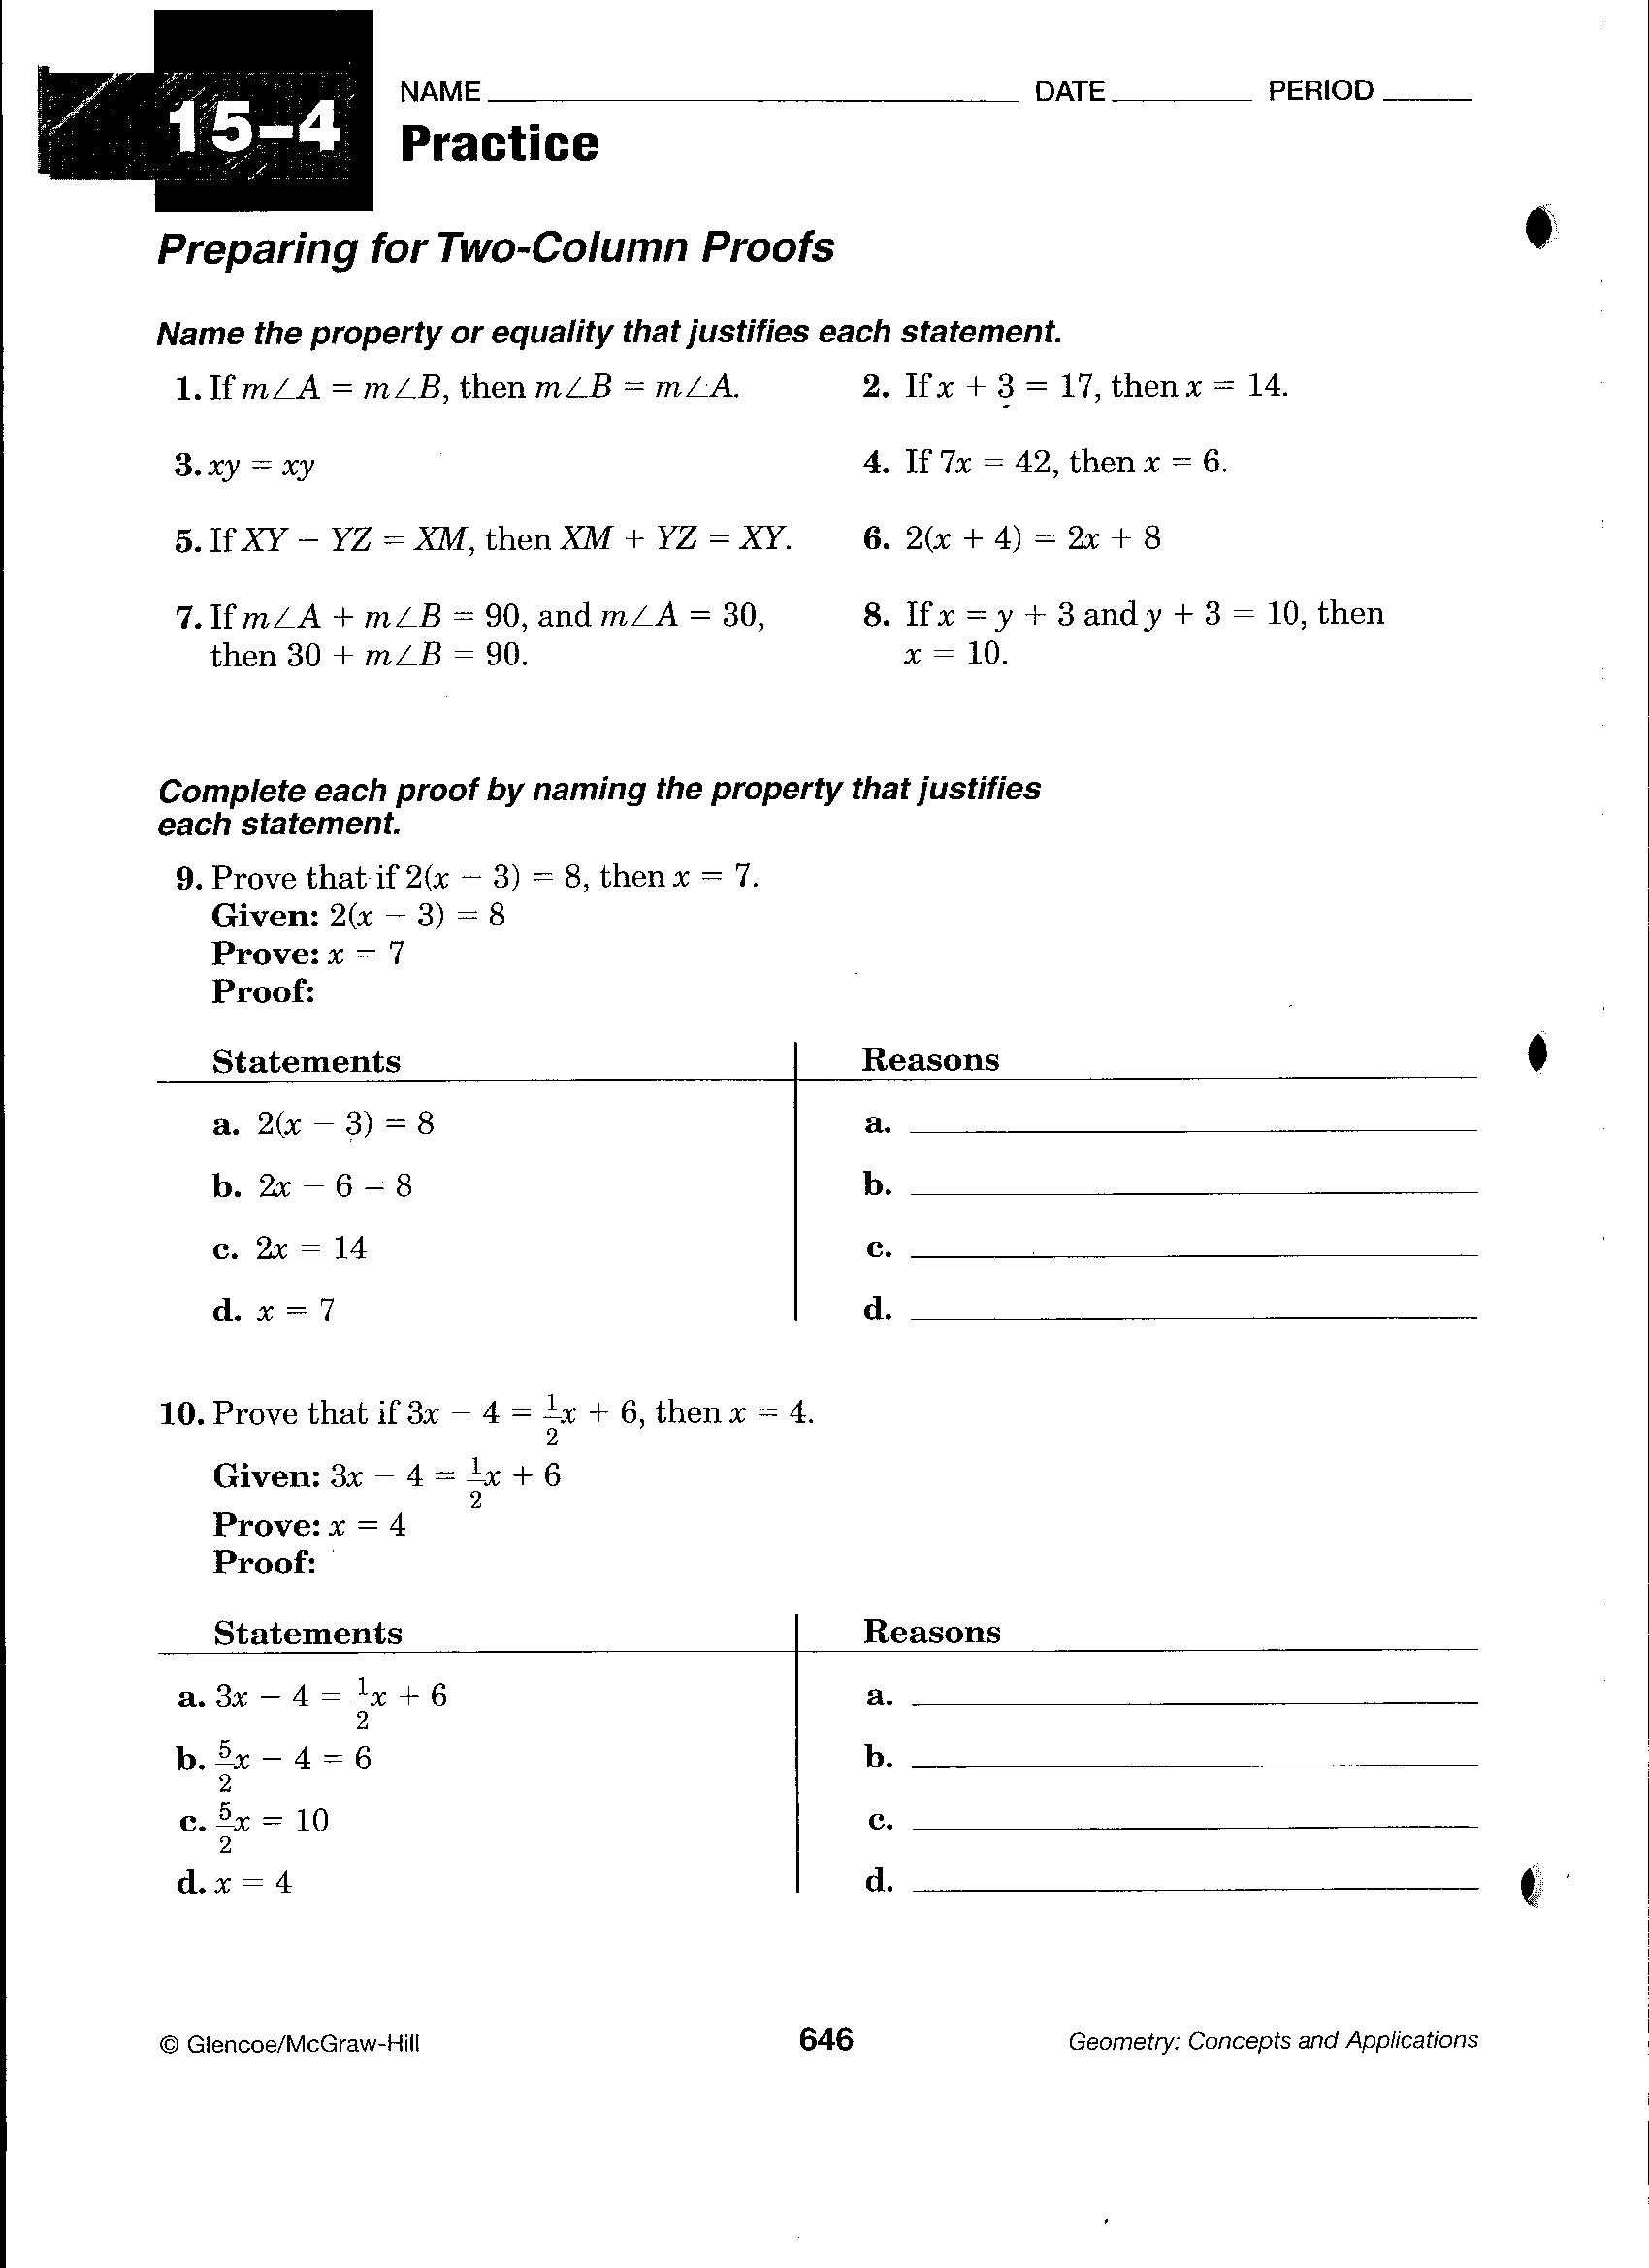 Glencoe Geometry Chapter 4 Worksheet Answers together with Geometry Practice Worksheets with Answers the Best Worksheets Image